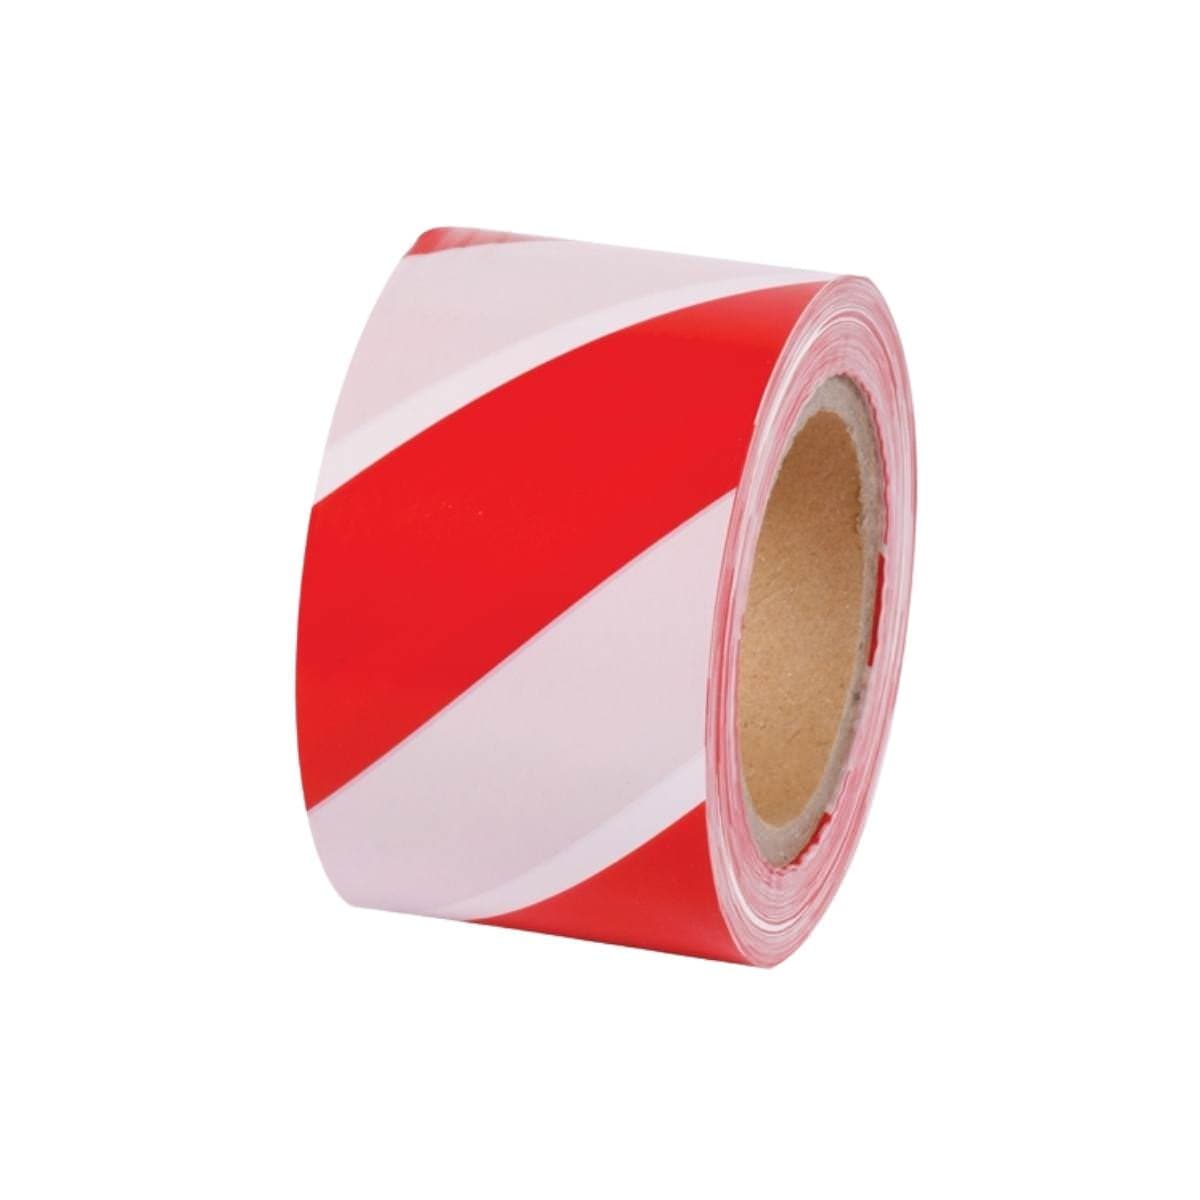 Husky 560 Red/White Barrier Tape (Roll)